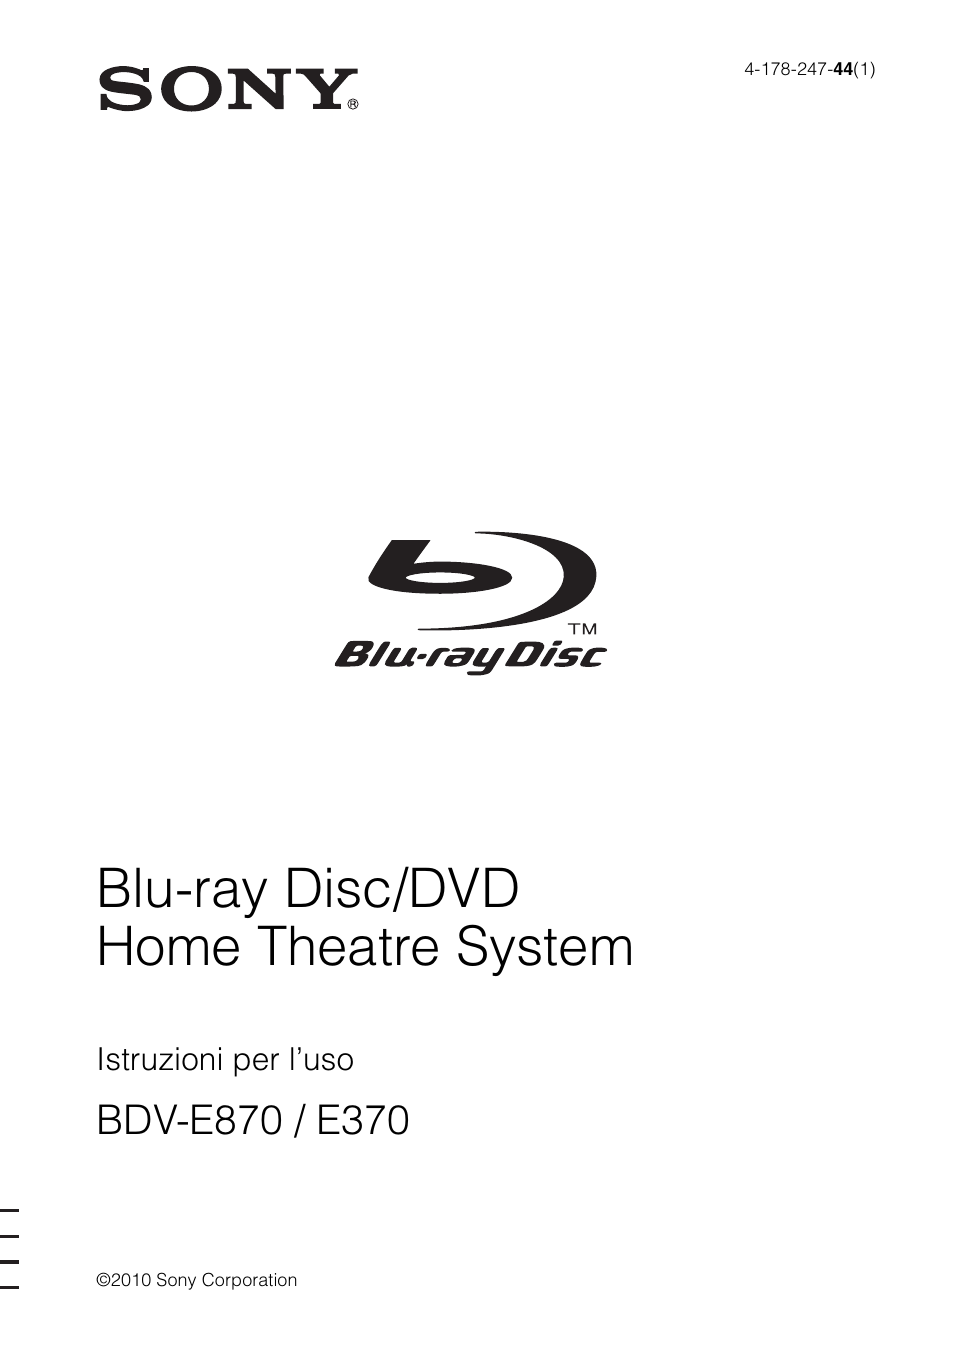 Sony BDV-E370 Manuale d'uso | Pagine: 84